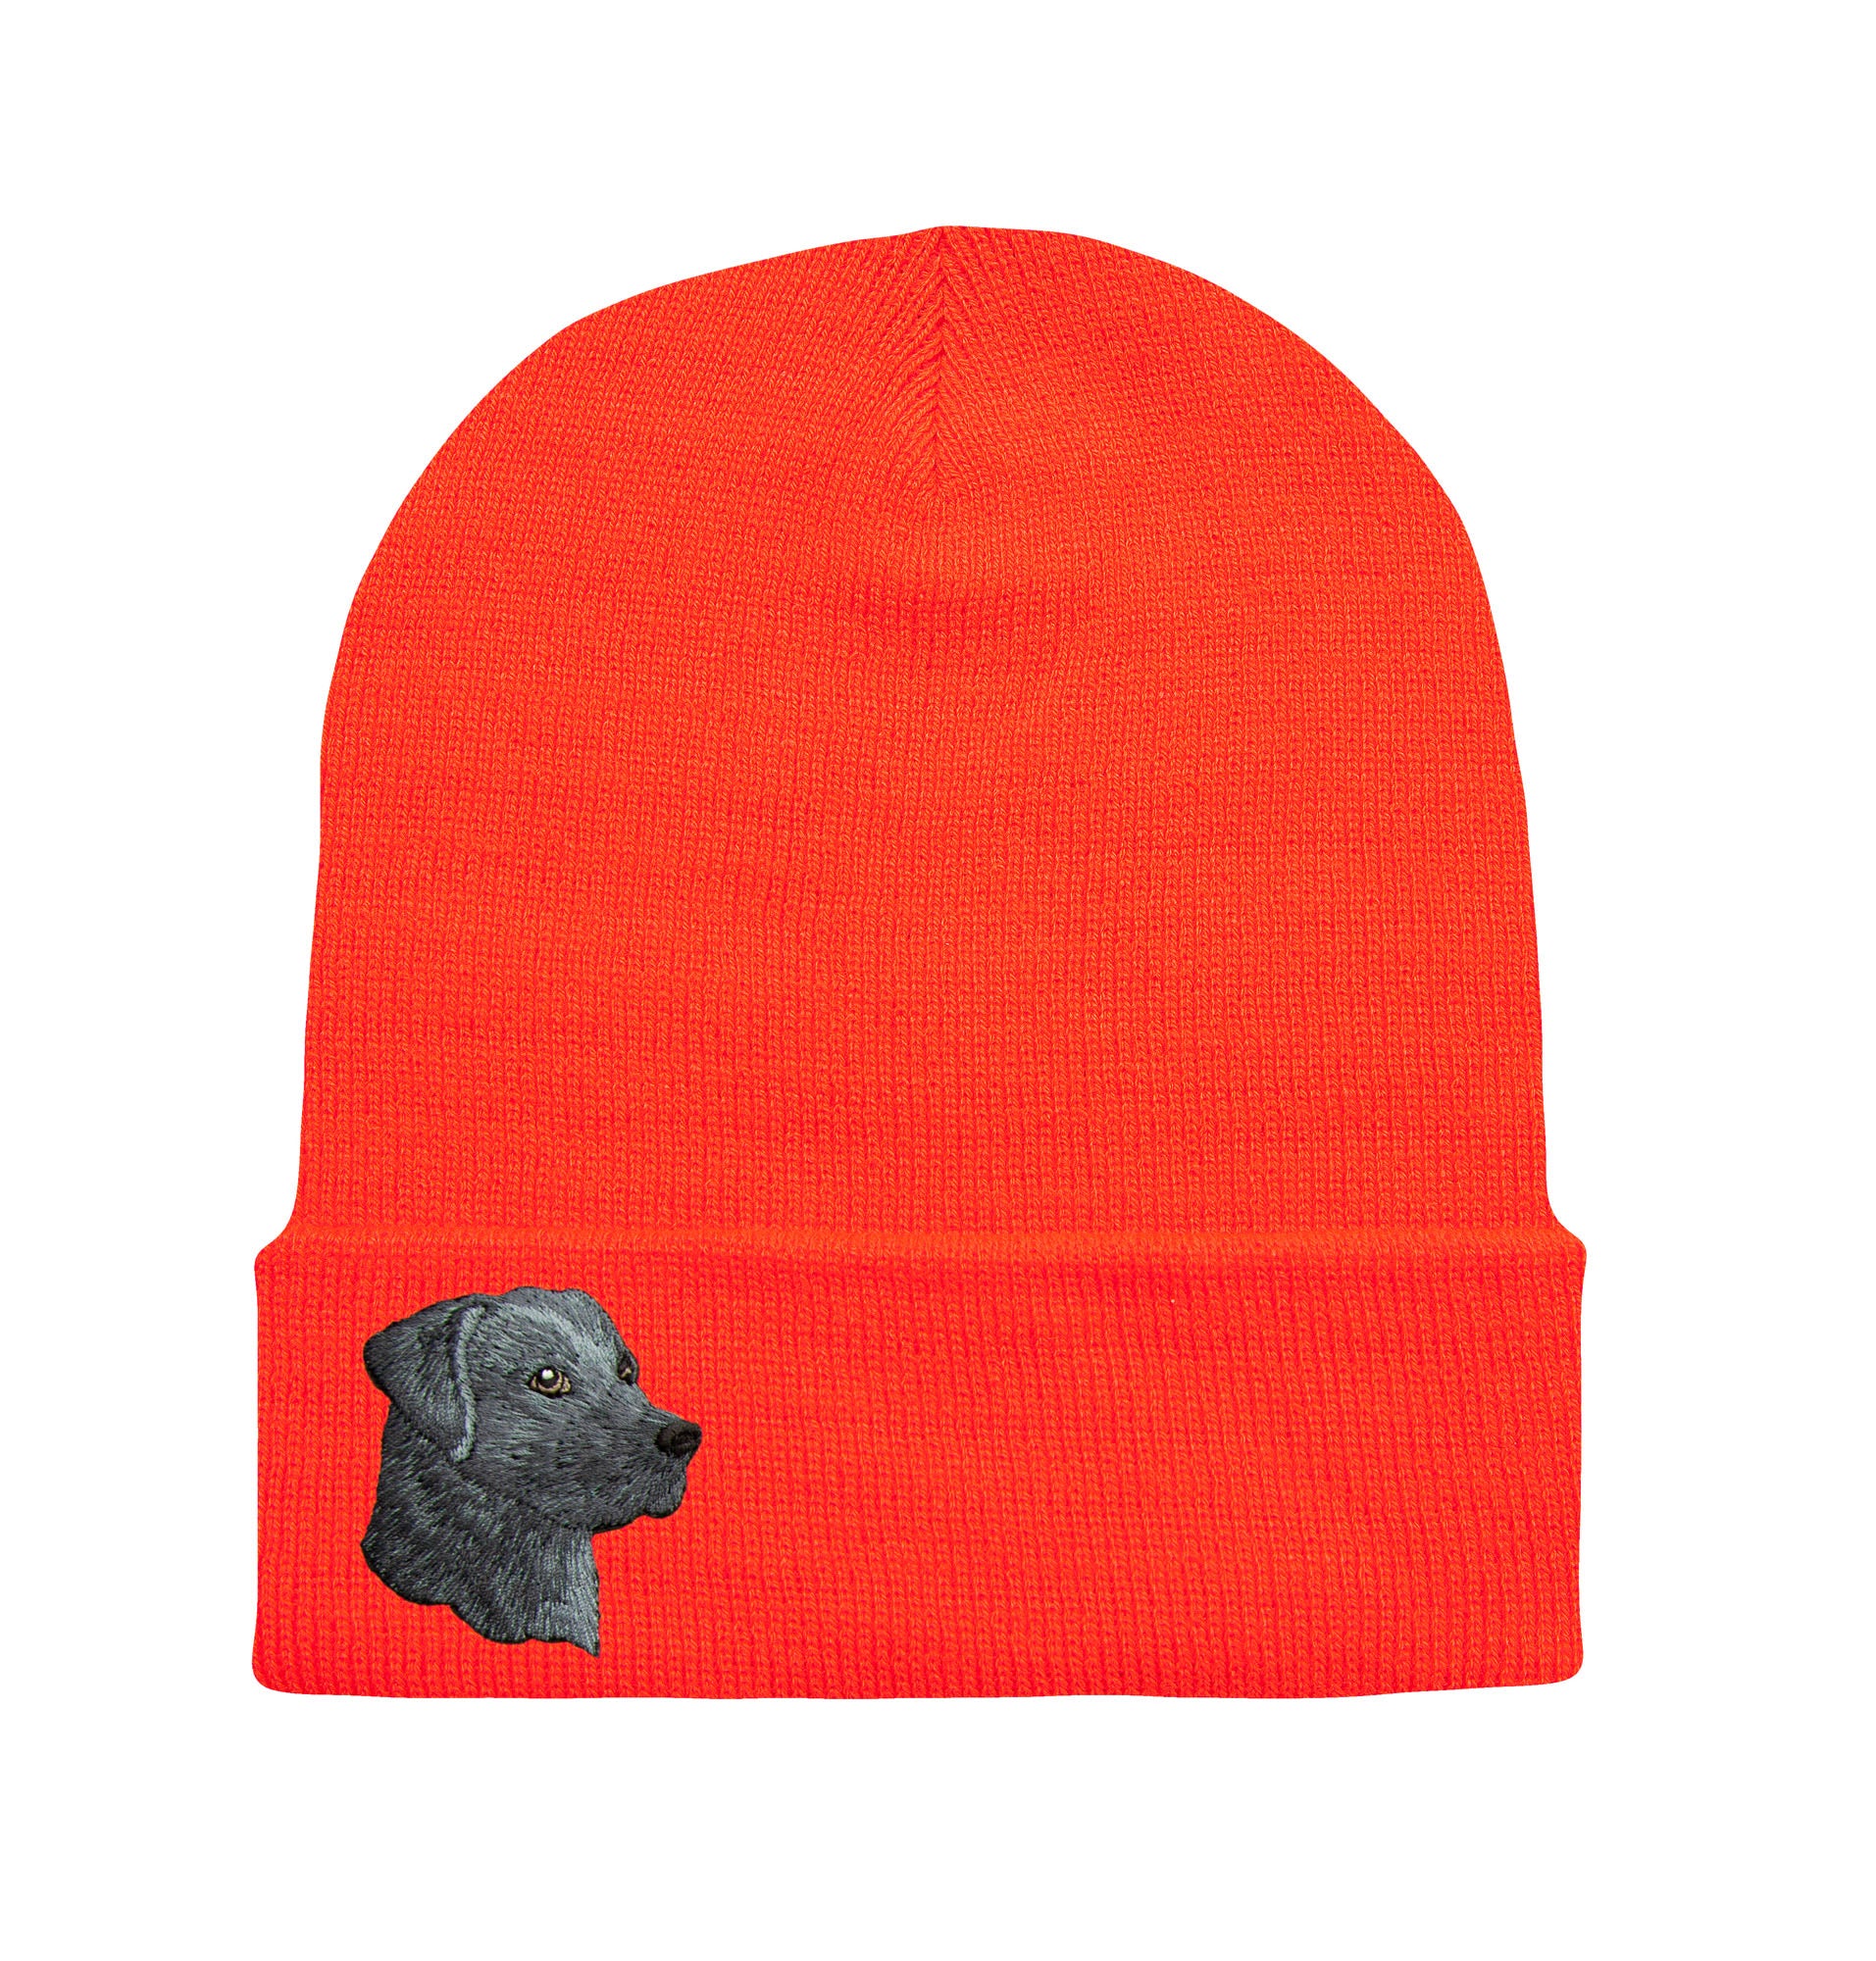 The Hat - Bright Orange